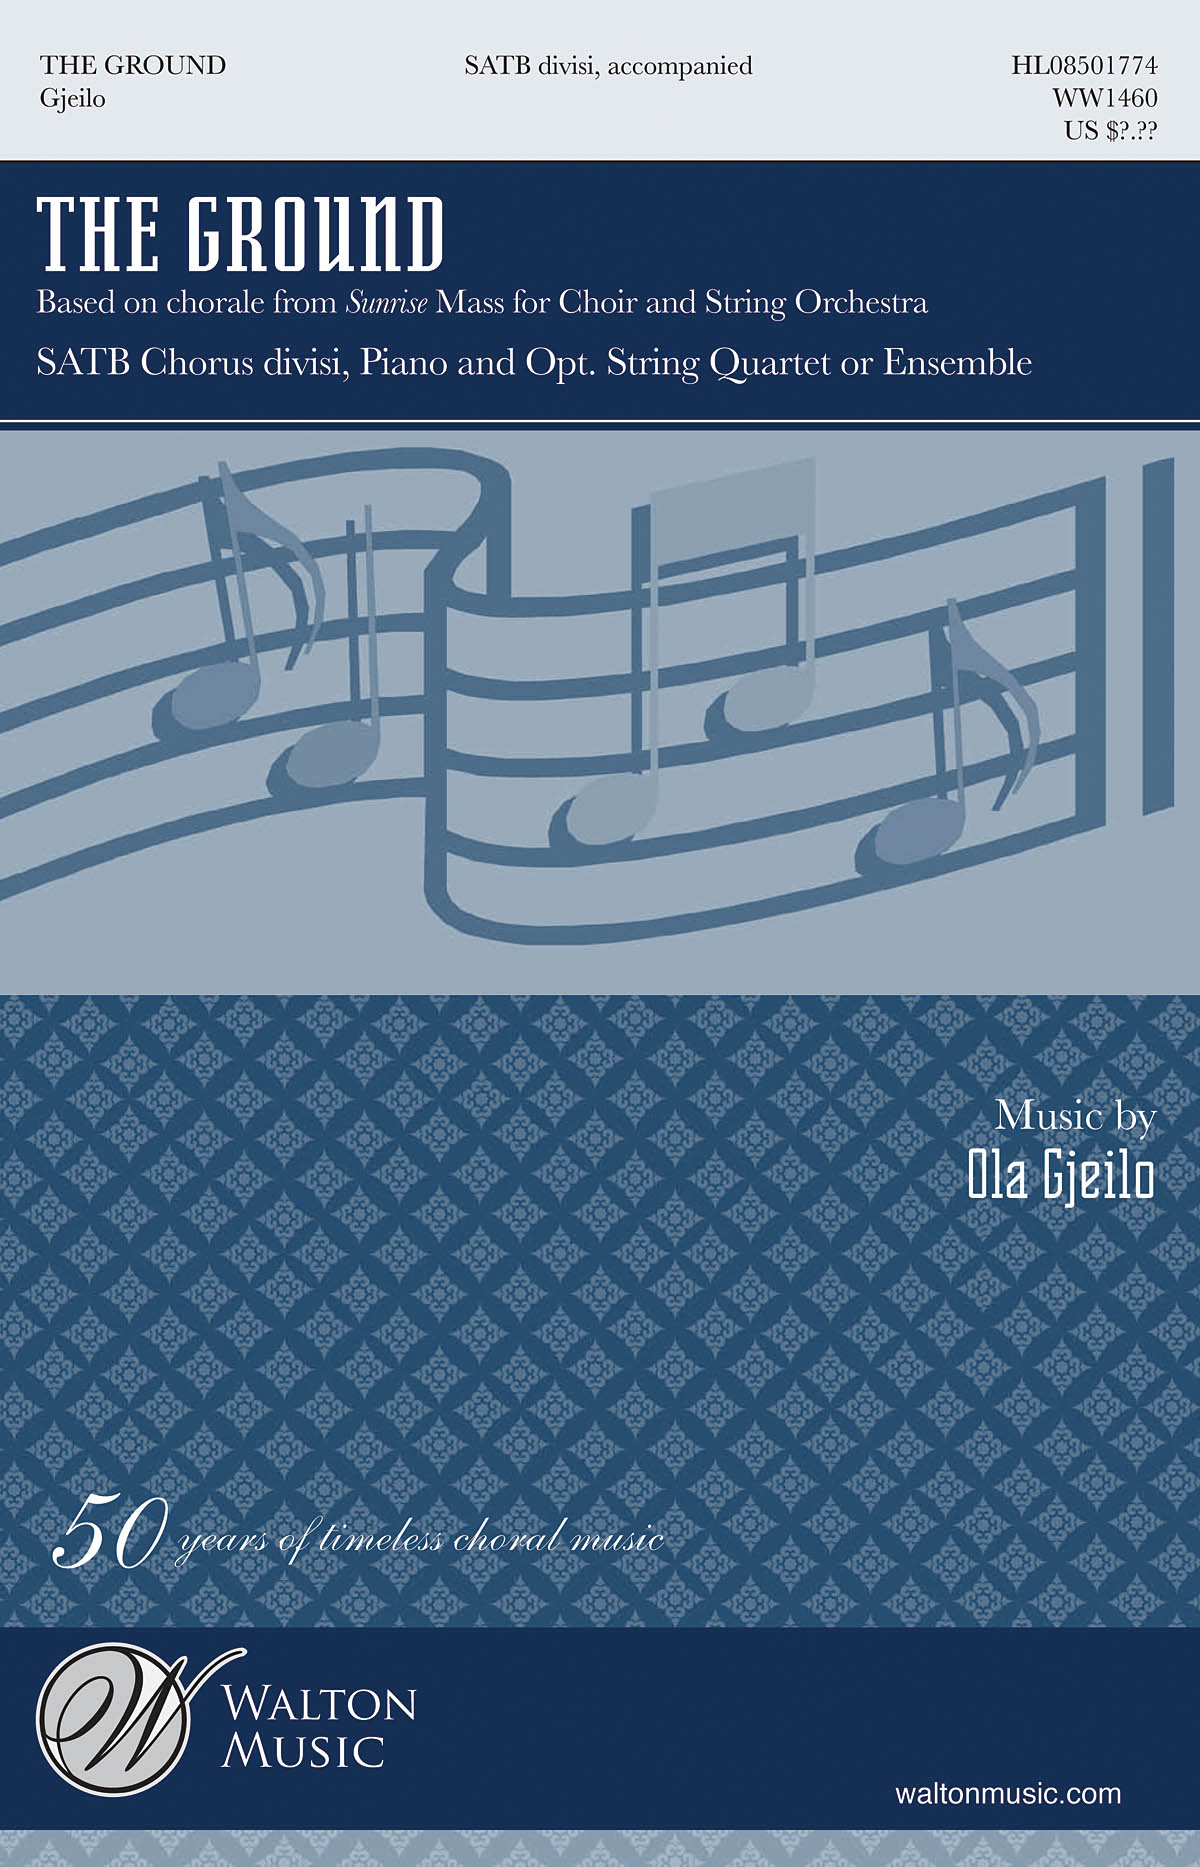 Ola Gjeilo: The Ground (from SUNRISE MASS): SATB: Vocal Score